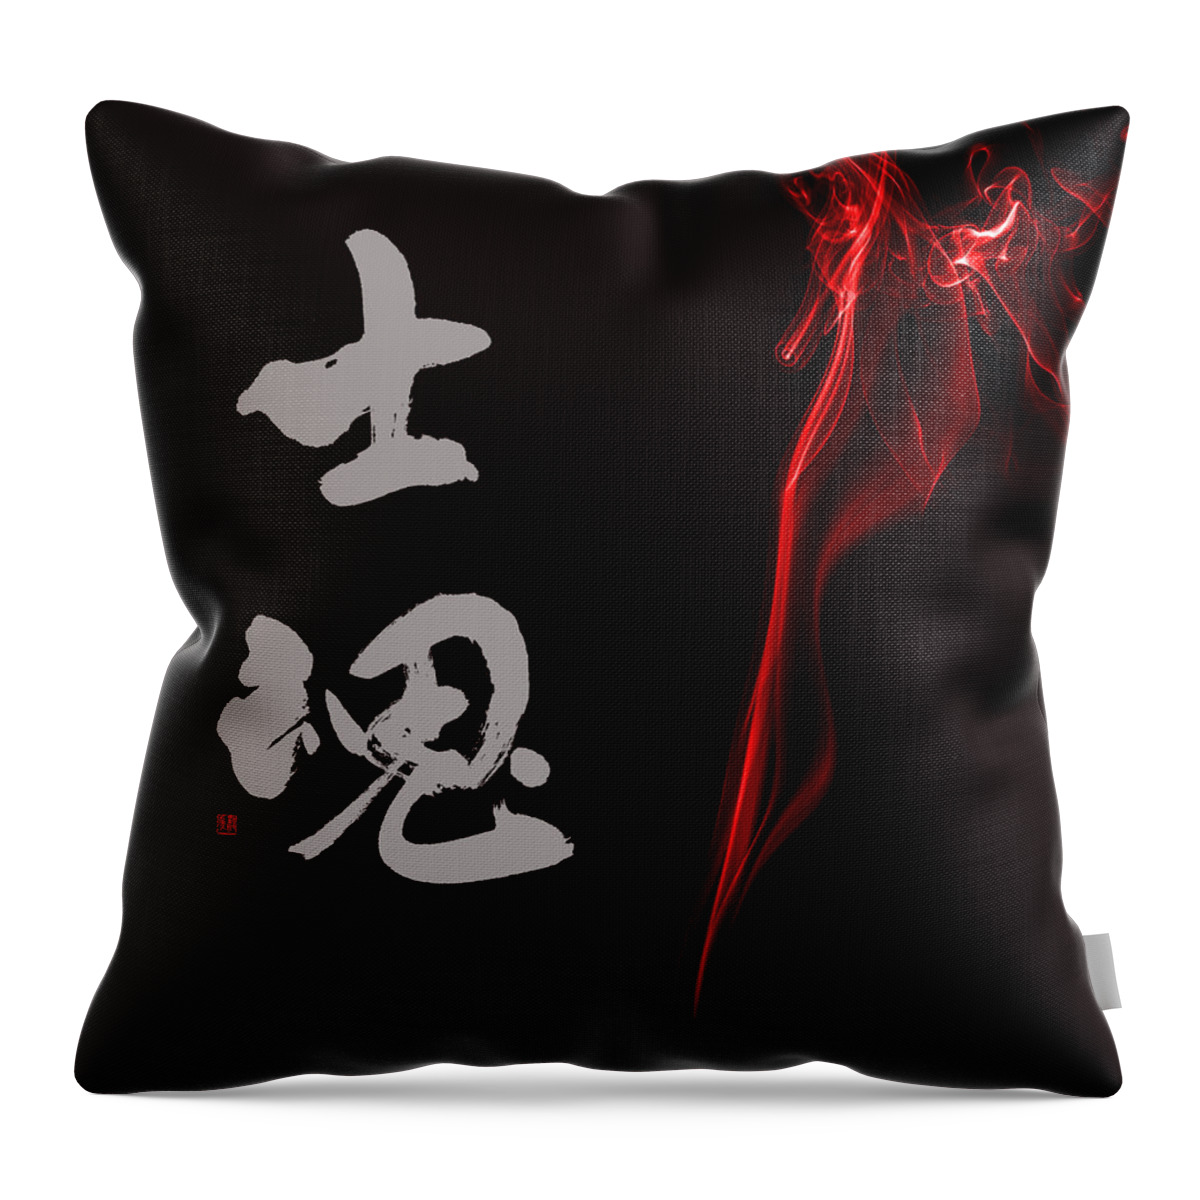 Samurai Spirit Throw Pillow featuring the painting Samurai spirit by Ponte Ryuurui